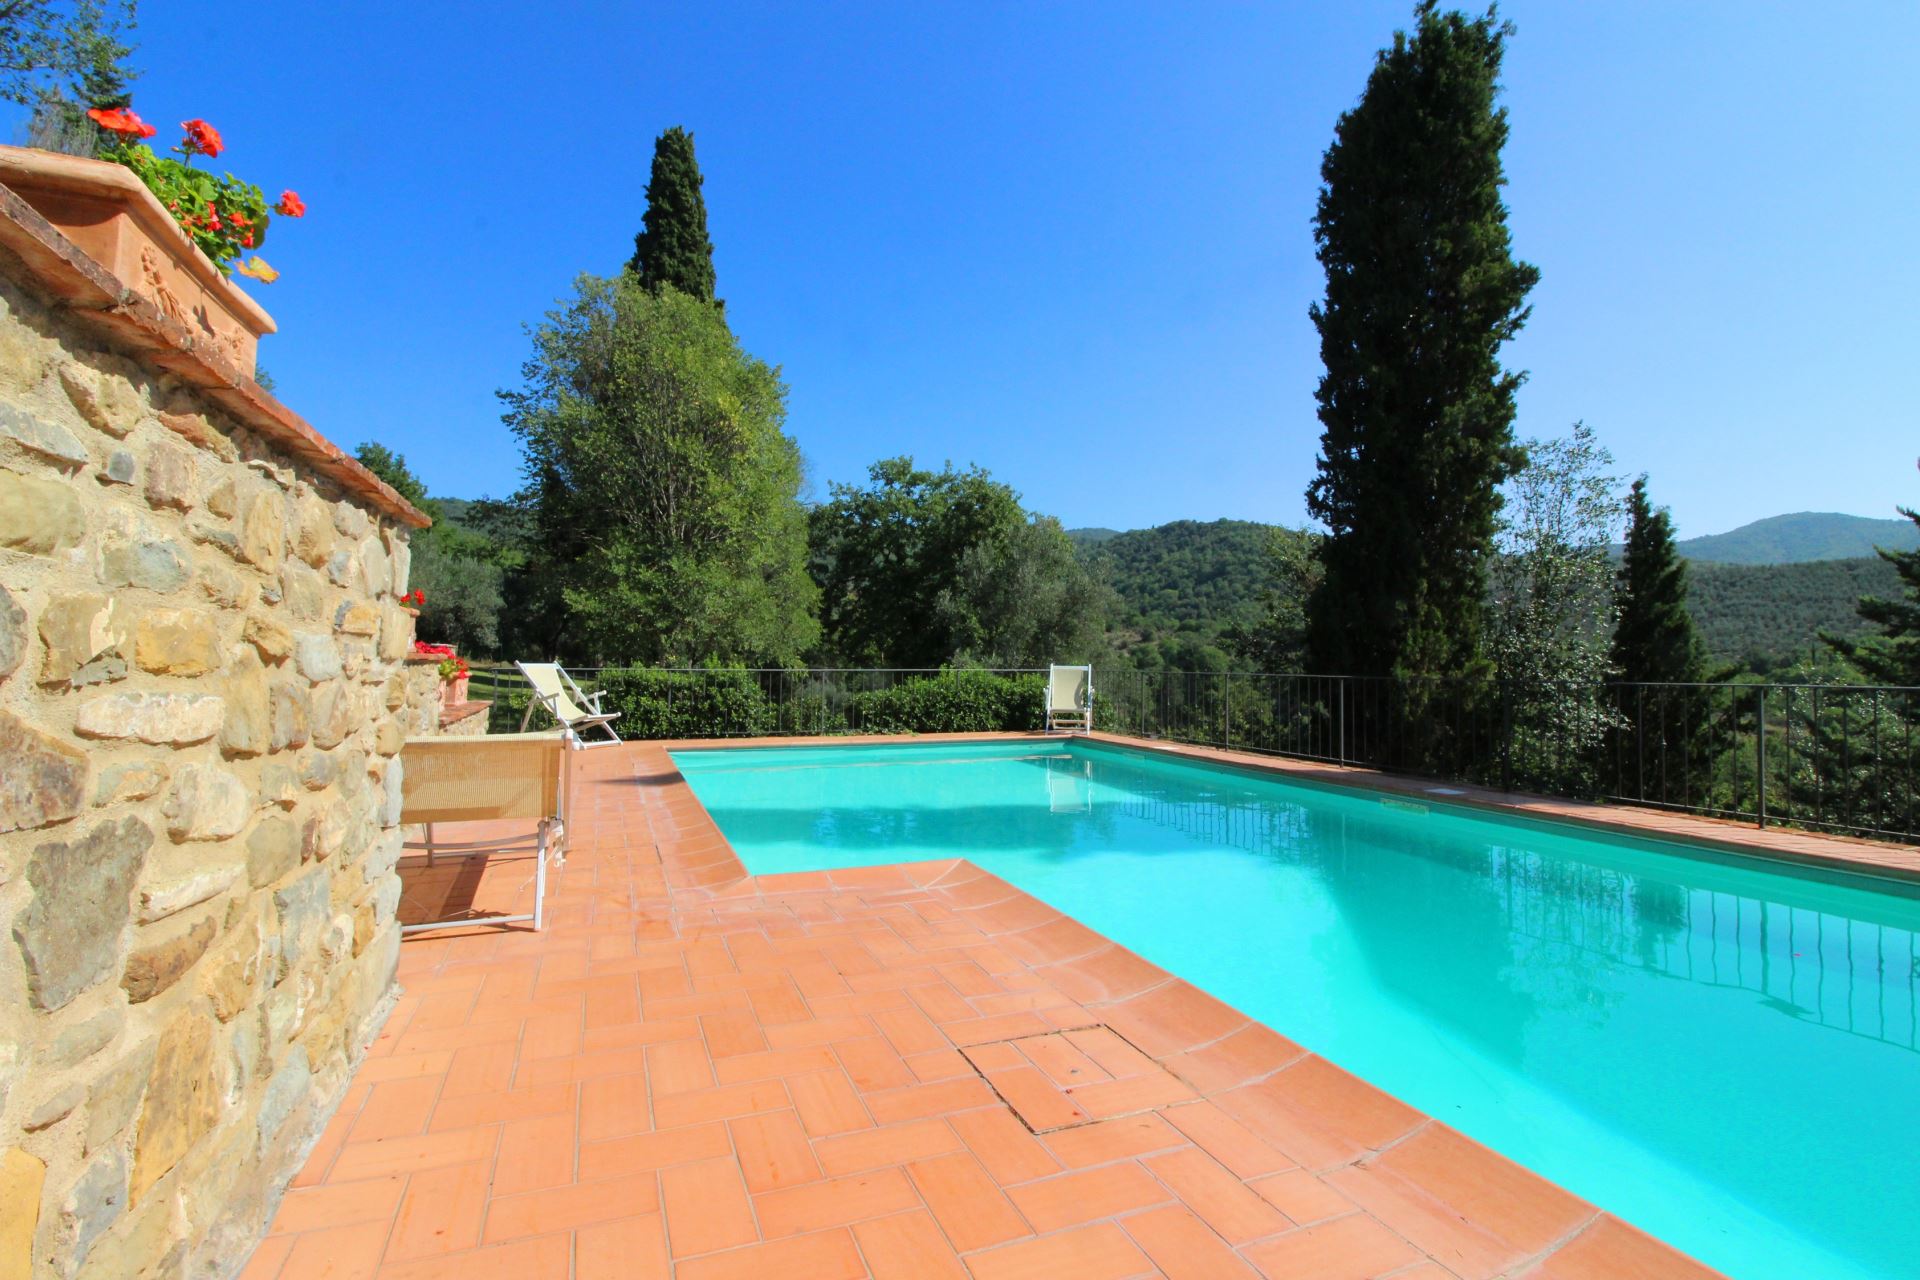 434_79628a7_Kindvriendelijk vakantiehuis met privé zwembad, Borgo Caprile, Toscane, Cortona, Arezzo, (46).